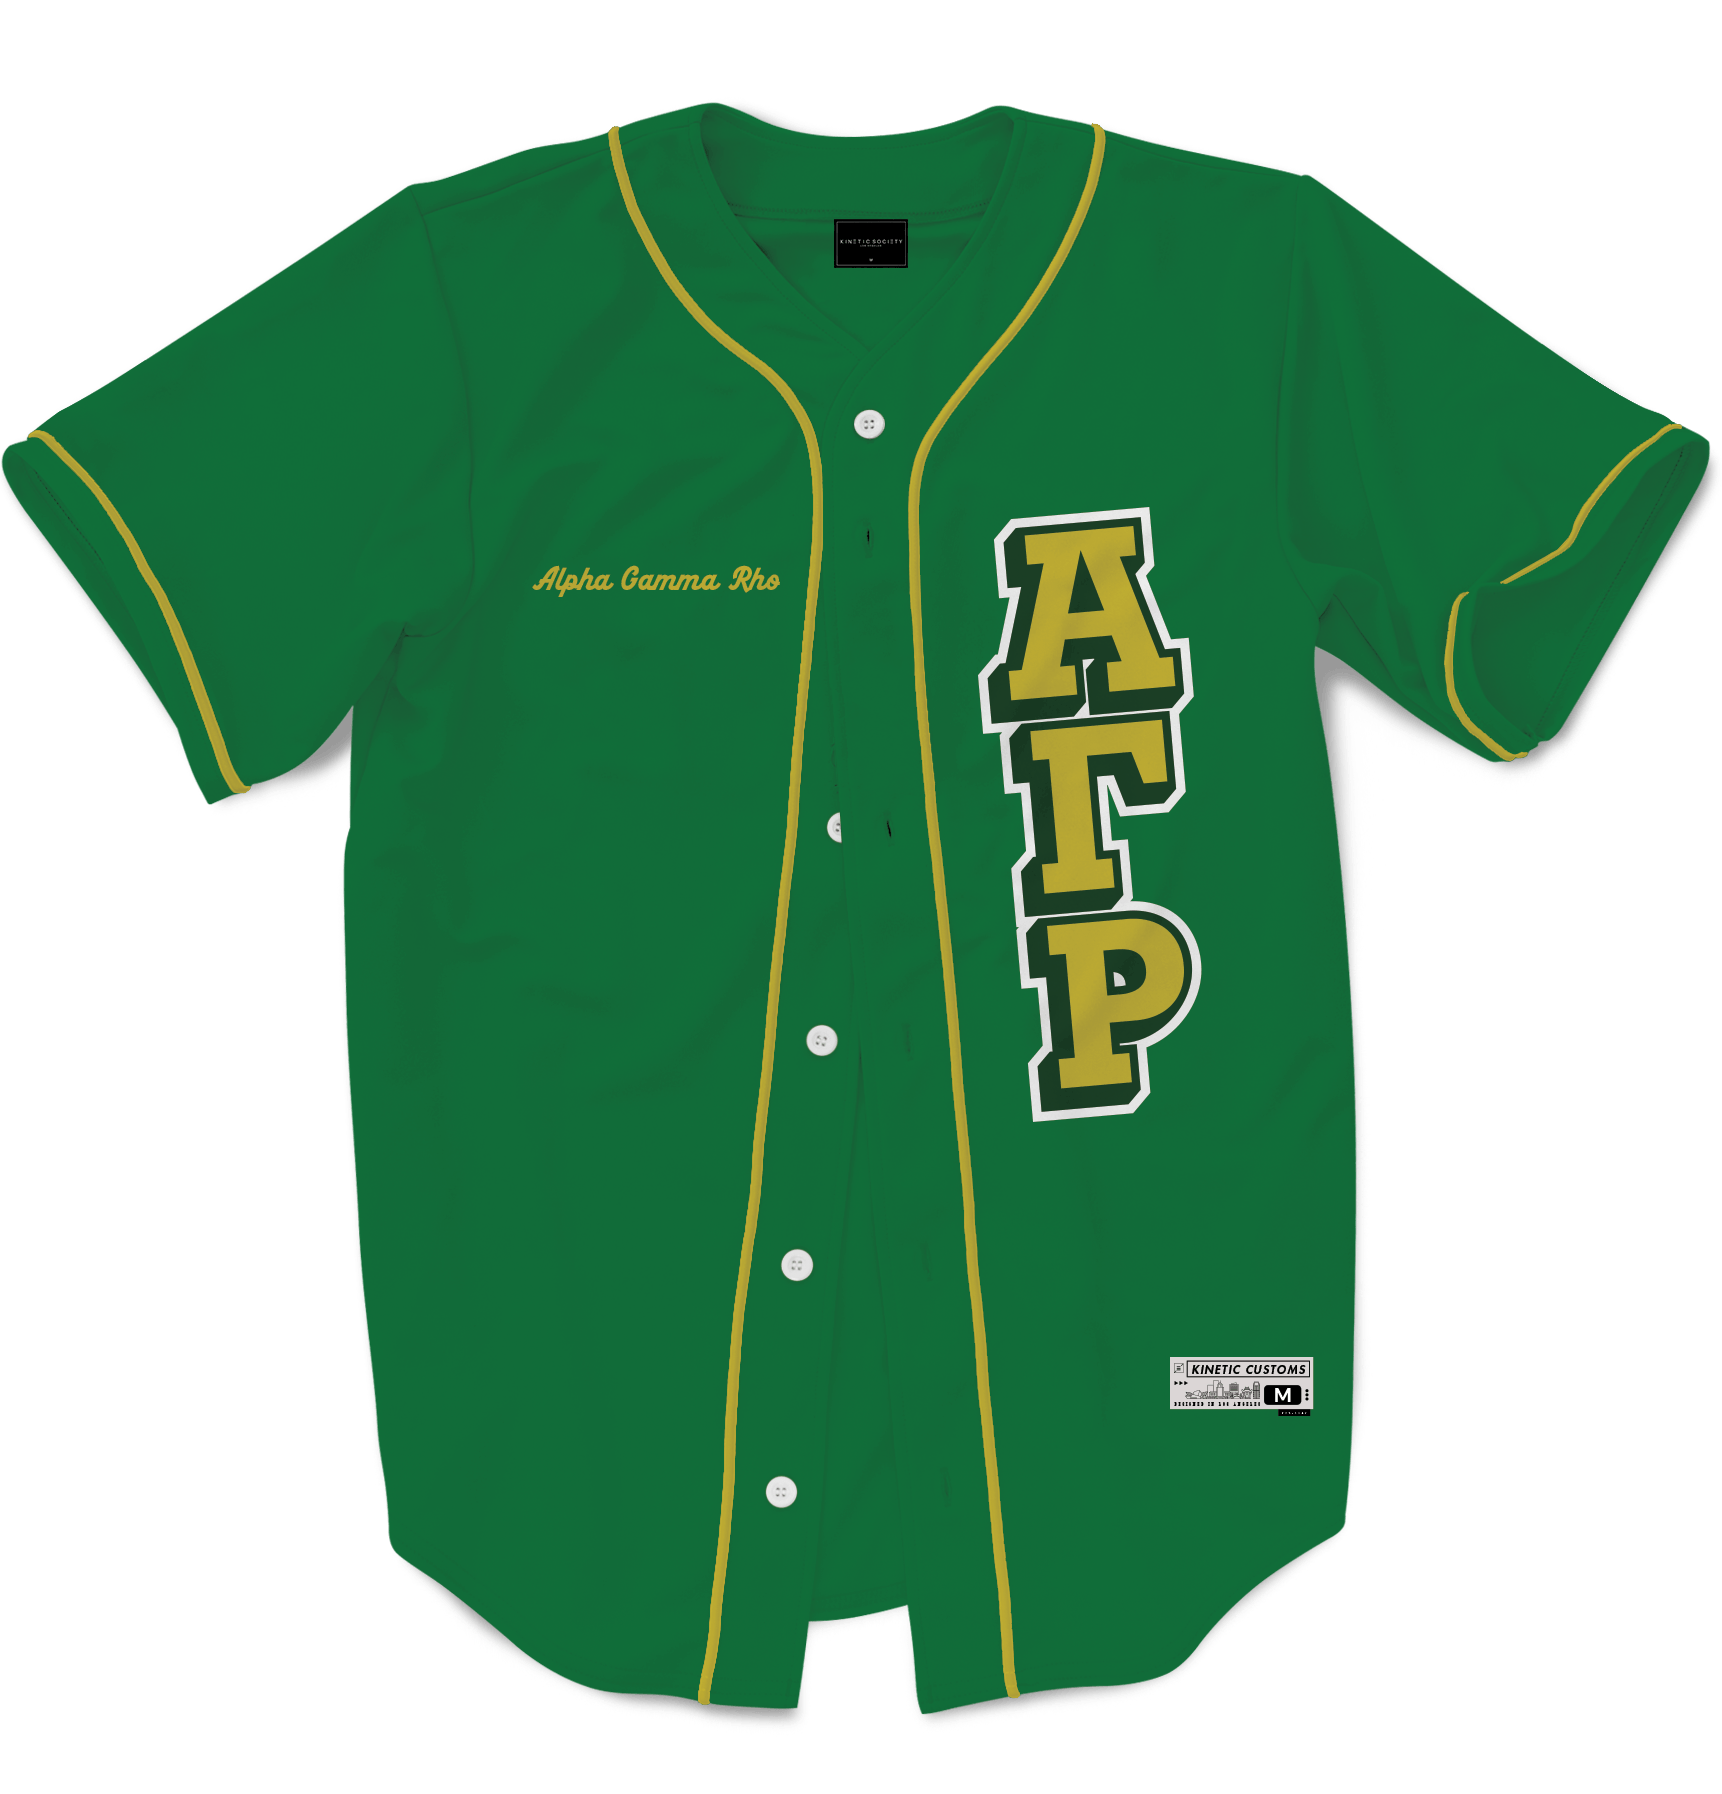 Alpha Gamma Rho - The Block Baseball Jersey Premium Baseball Kinetic Society LLC 